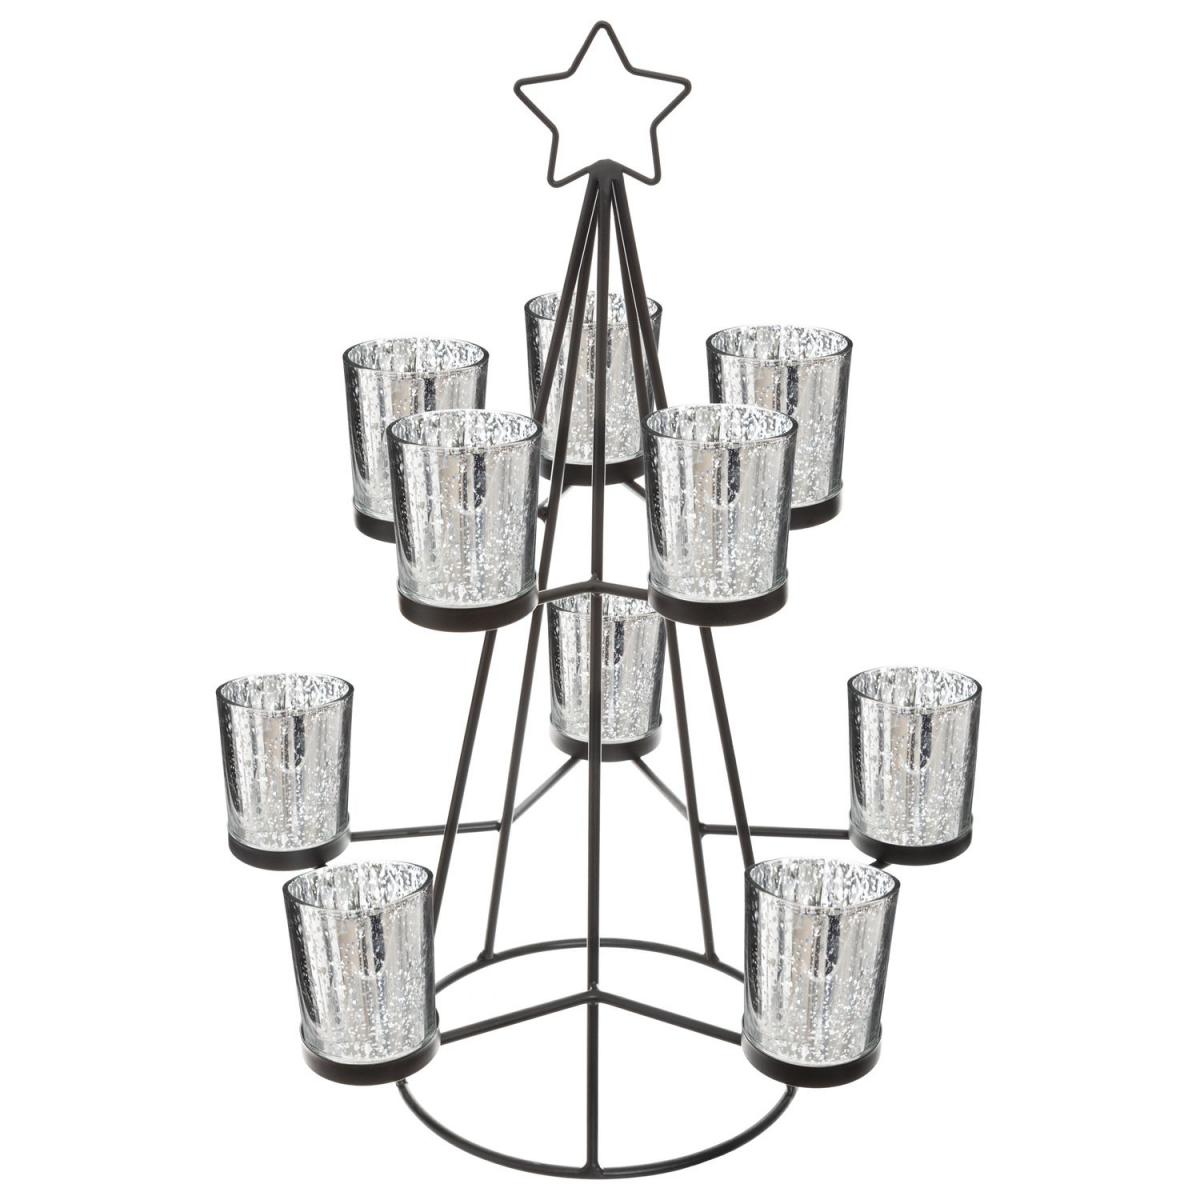 JJA - Photophore de Noël design métal Sapin - Noir - Décorations de Noël